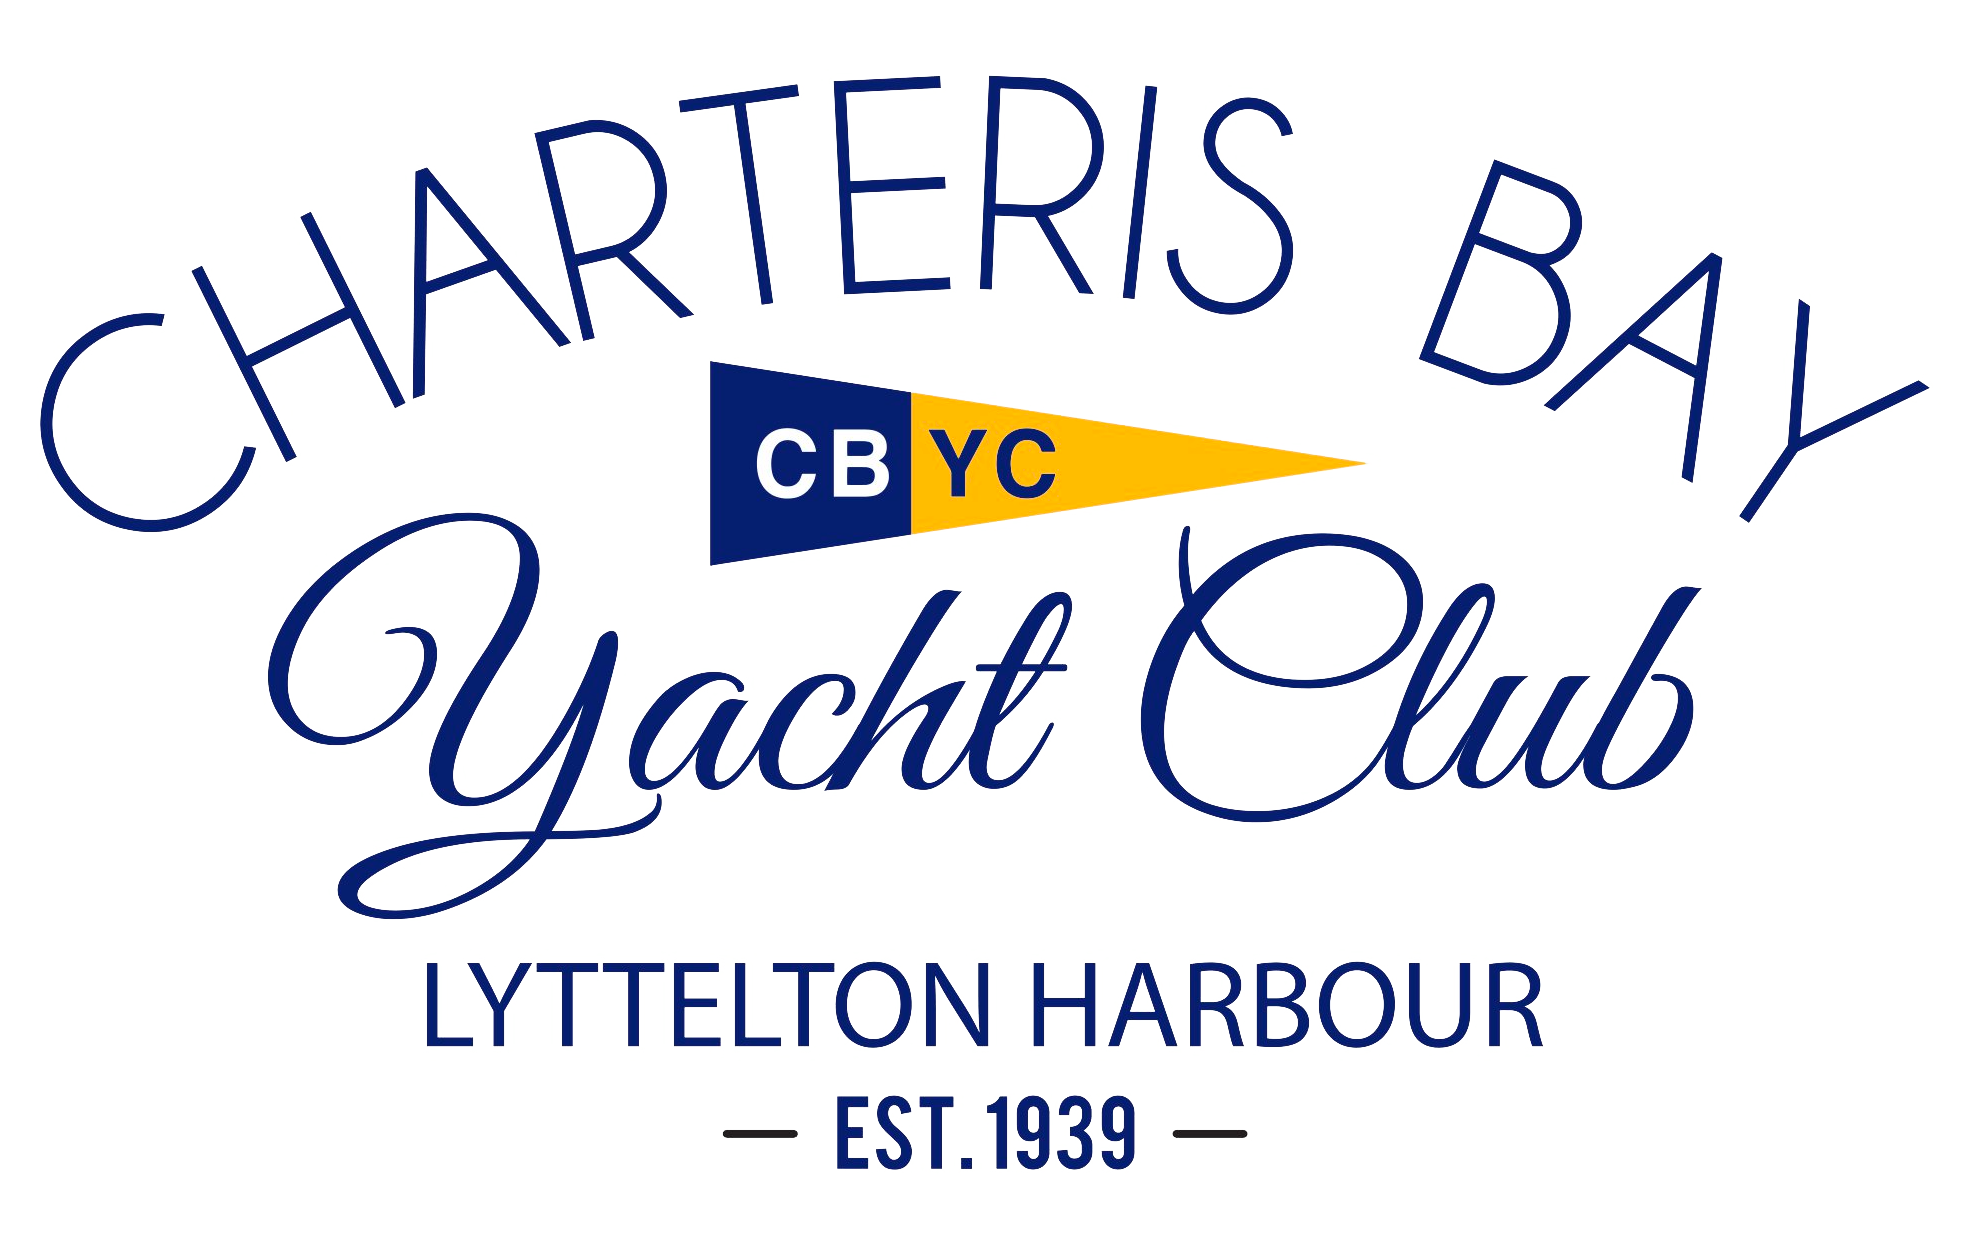 charteris bay yacht club